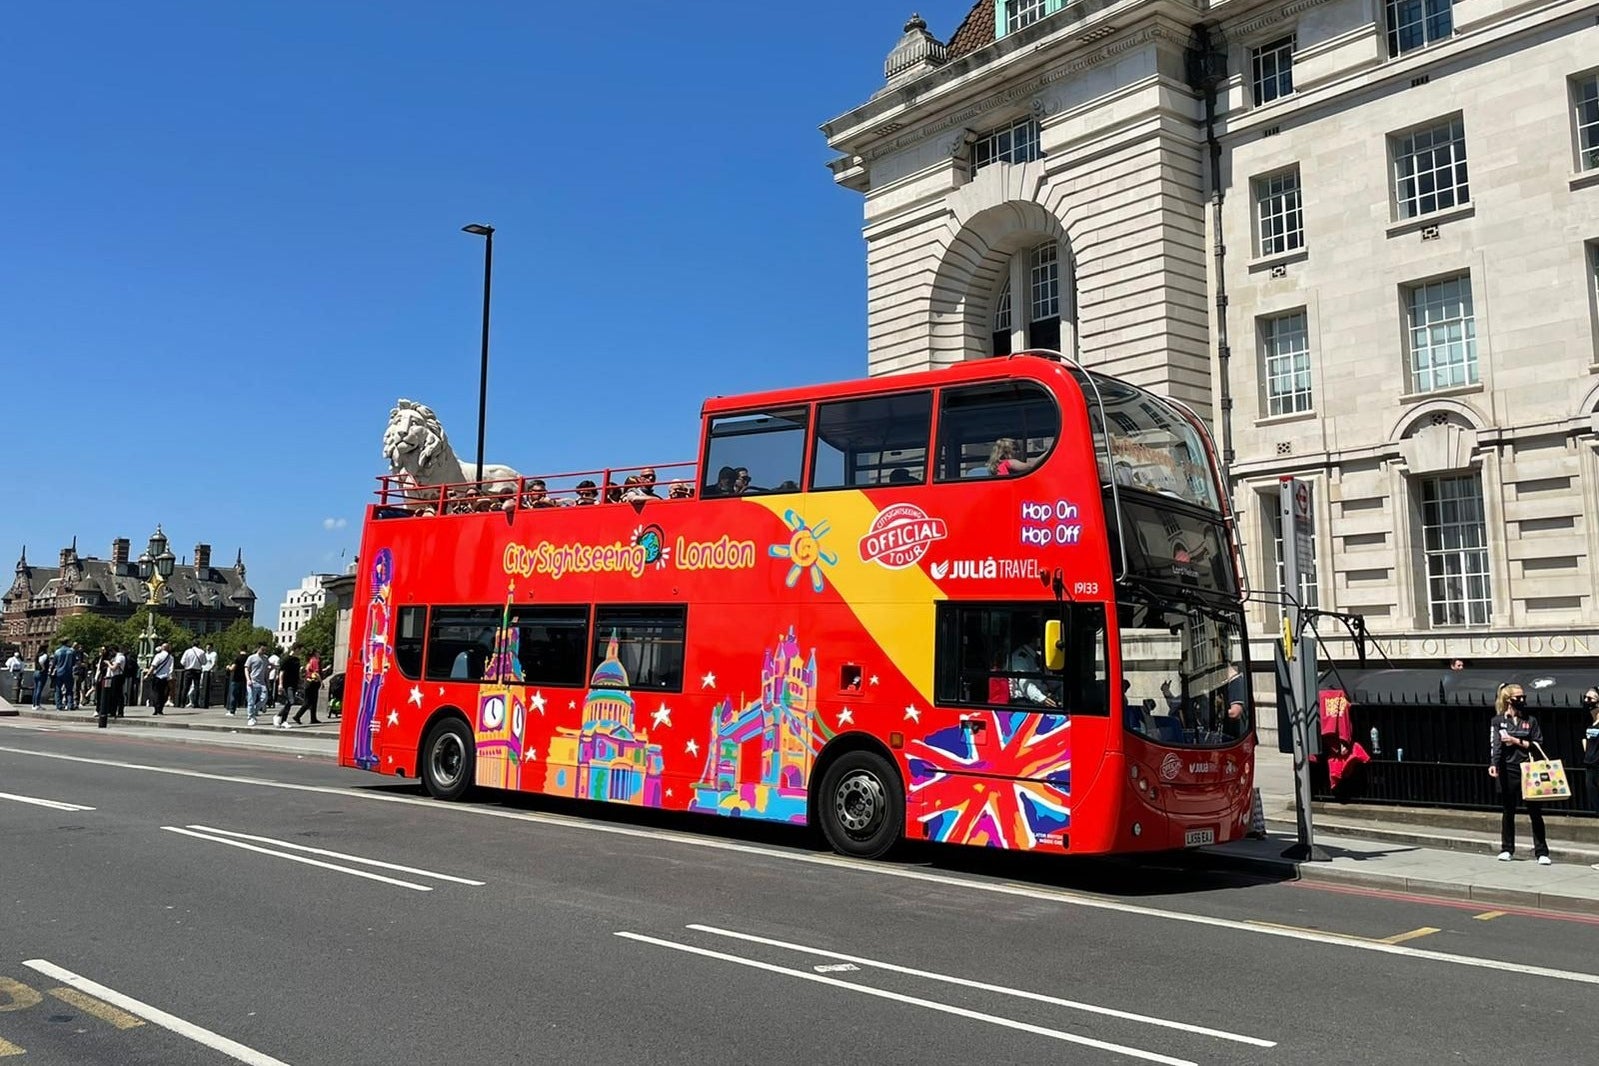 Autobus turistico di Londra, City Sightseeing